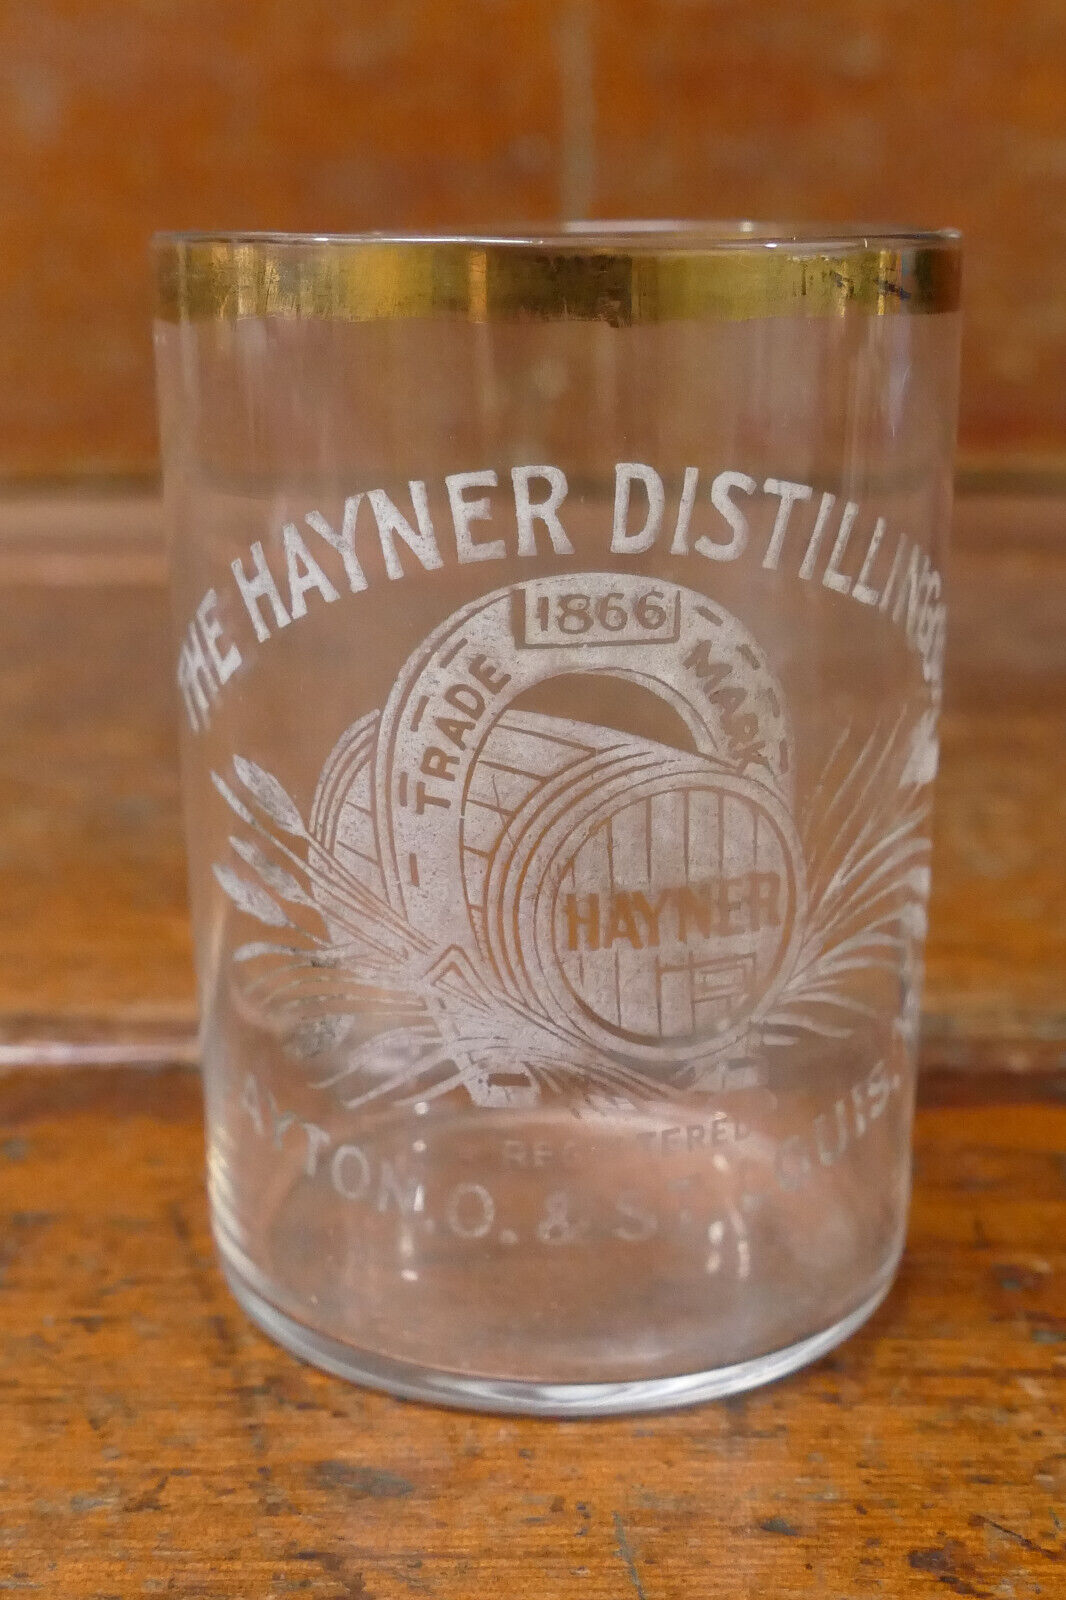 Pre Prohibition Era The Hayner Distilling Co. Etched Gold Trim Edge Shot Glass